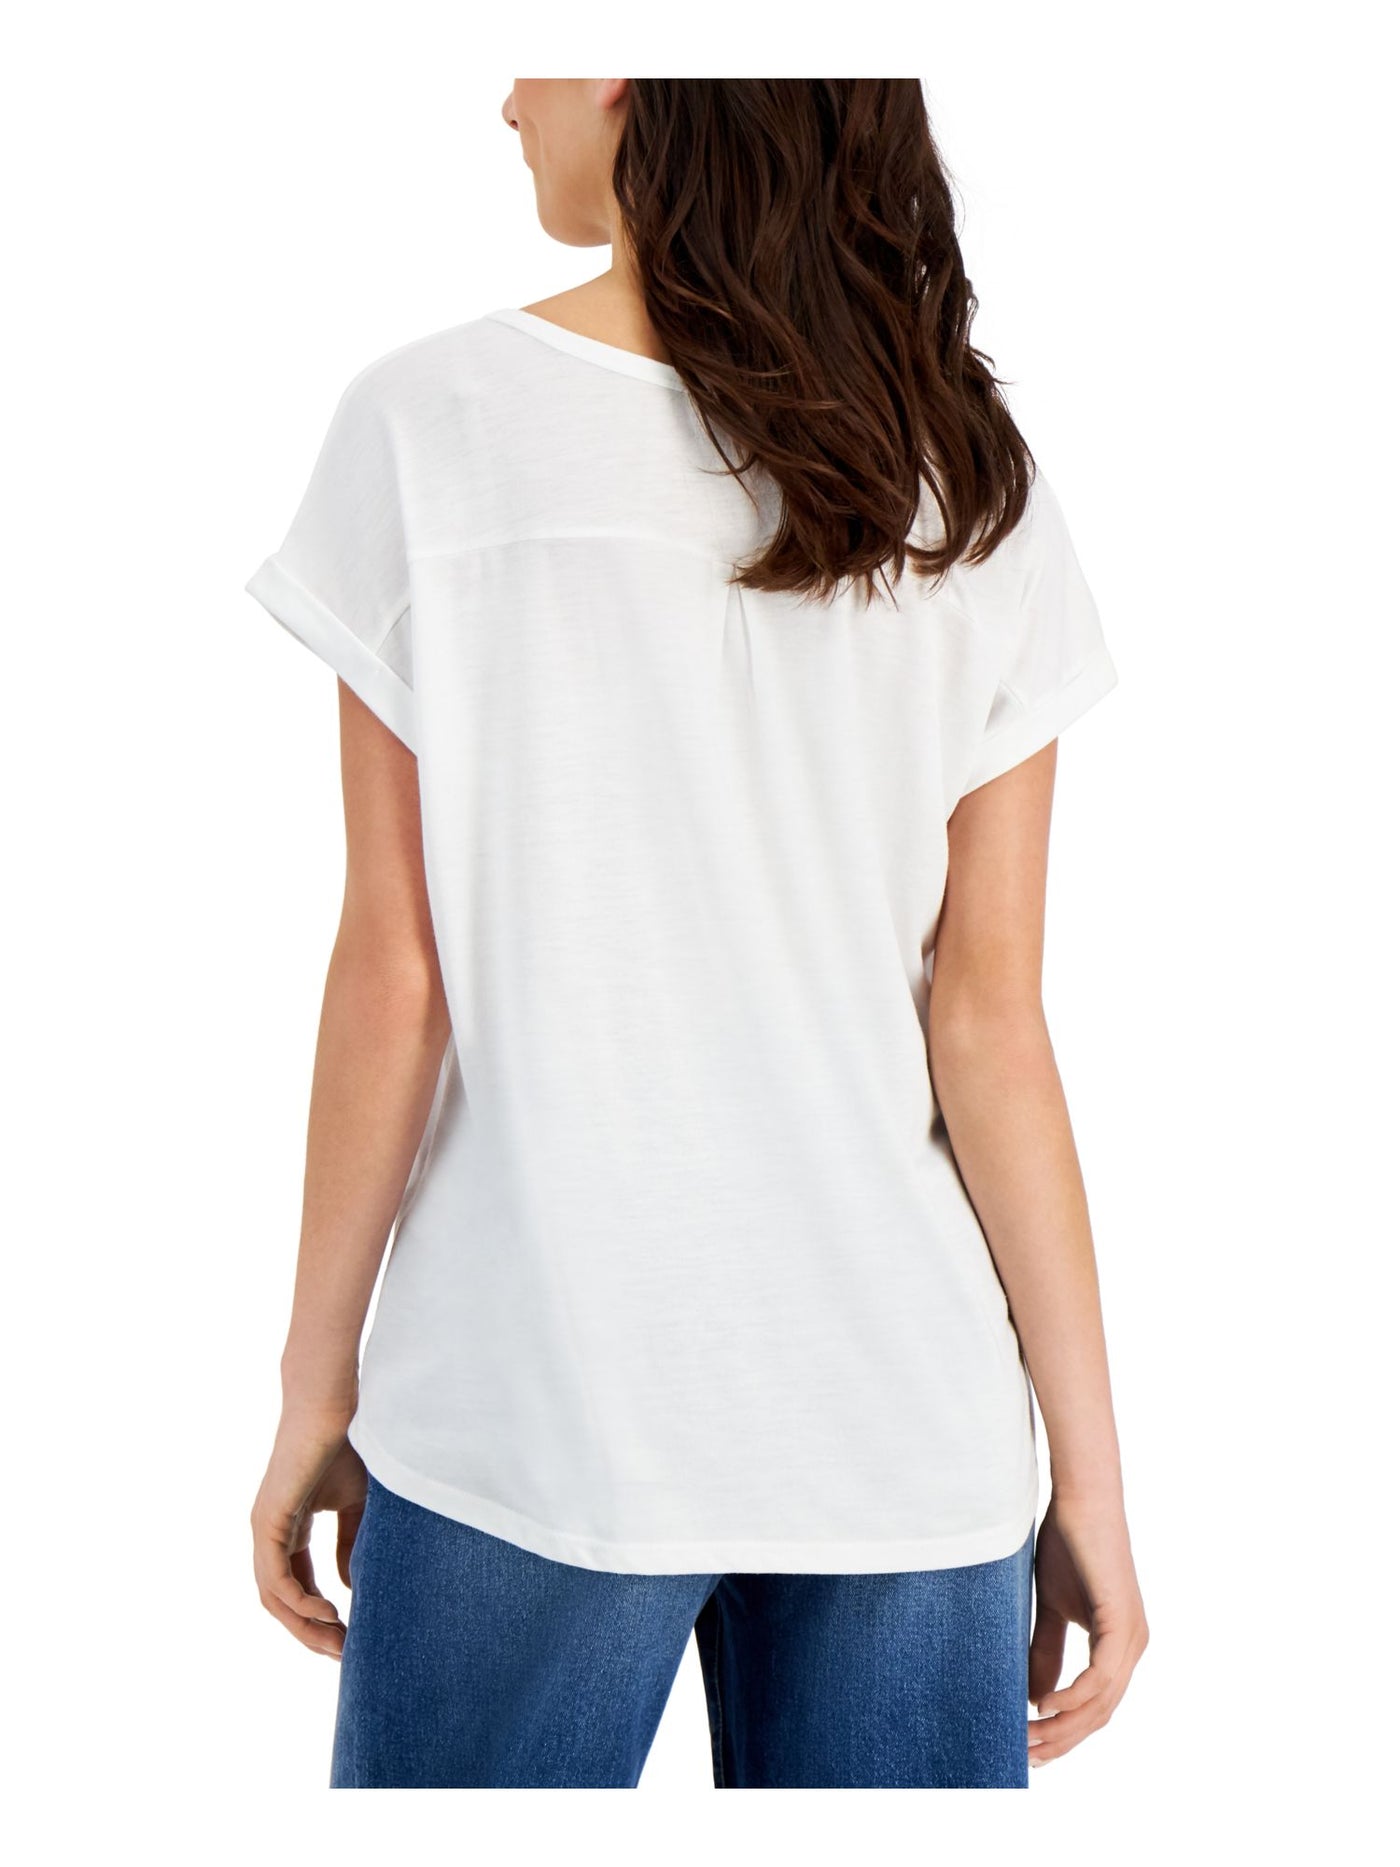 STYLE & COMPANY Womens White Graphic Short Sleeve V Neck T-Shirt Plus 2X